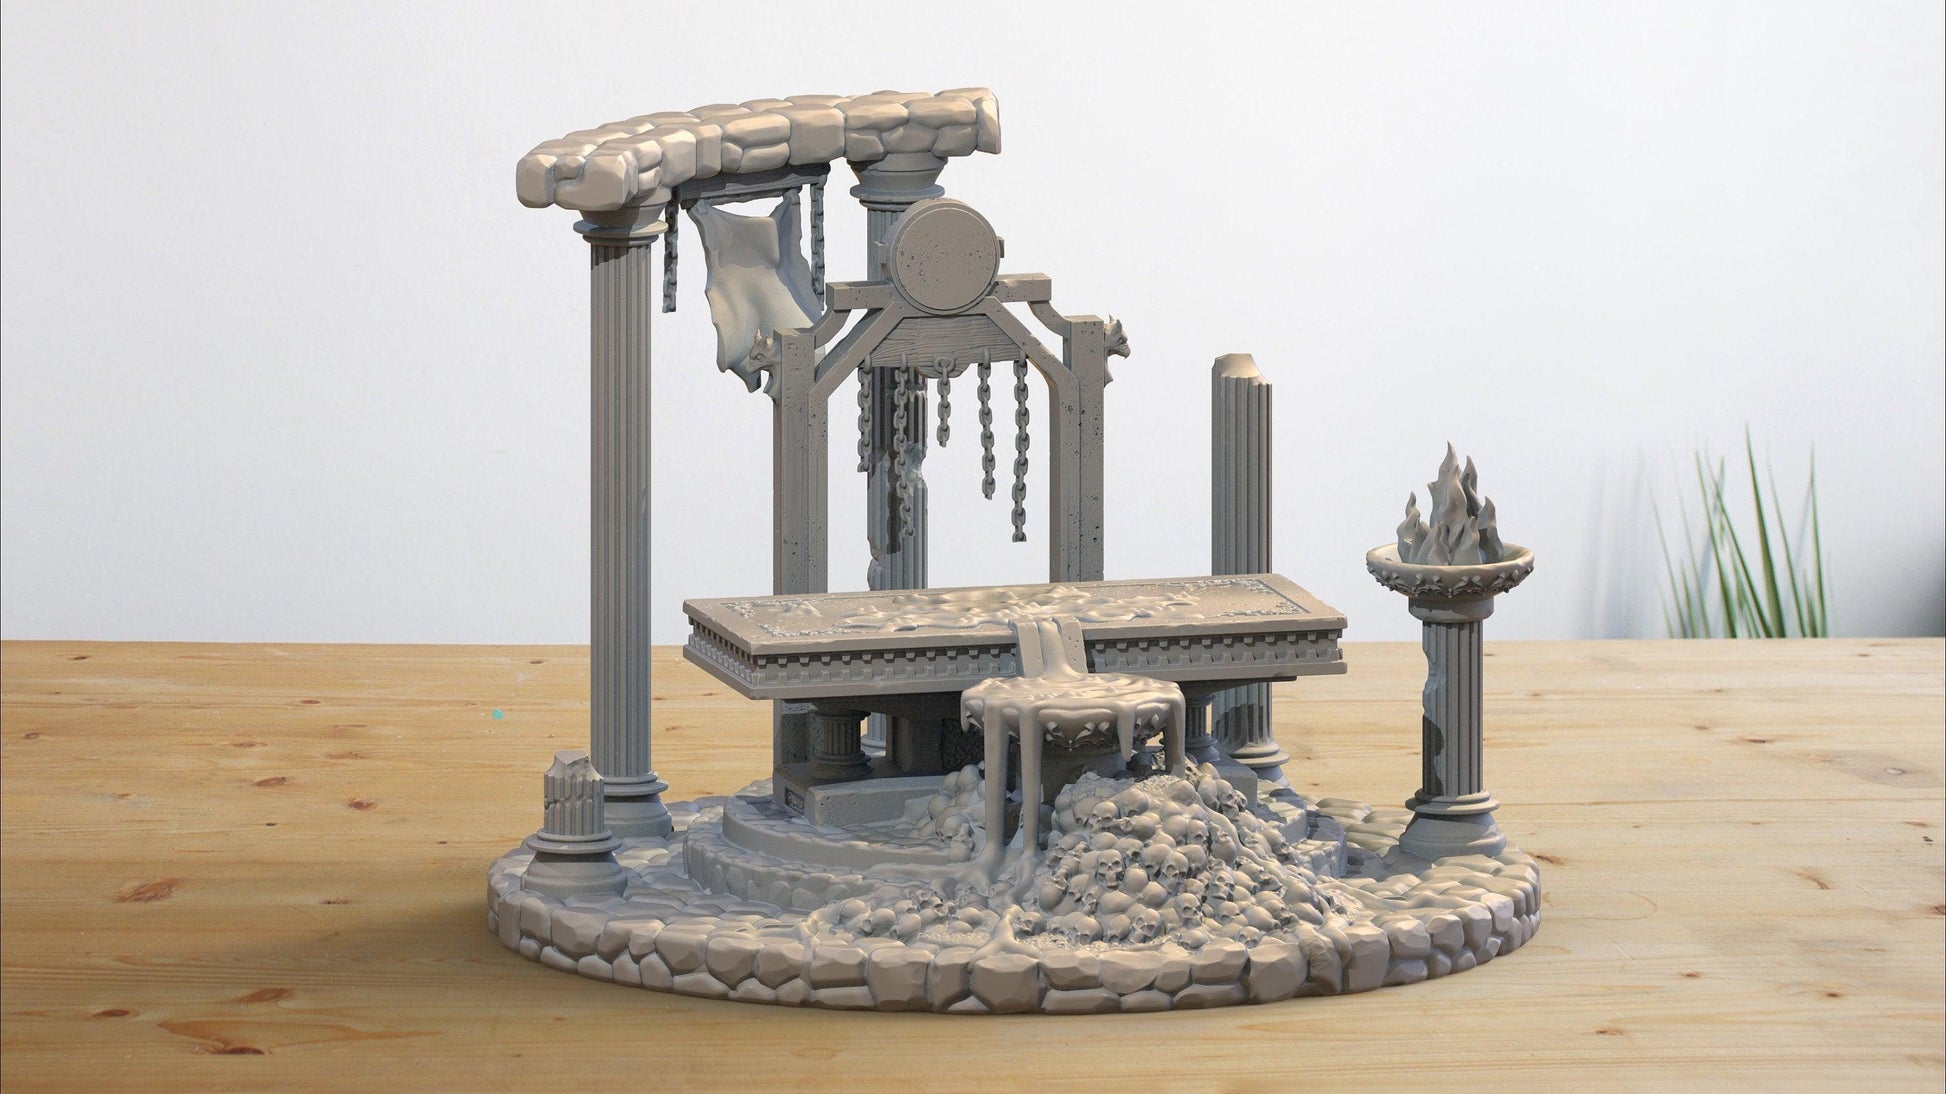 Sacrificial Altar miniature Wargaming Terrain | Clay Cyanide | Ruins | Tabletop Scenery | DnD Miniature | Dungeons and Dragons, DnD terrain - Plague Miniatures shop for DnD Miniatures